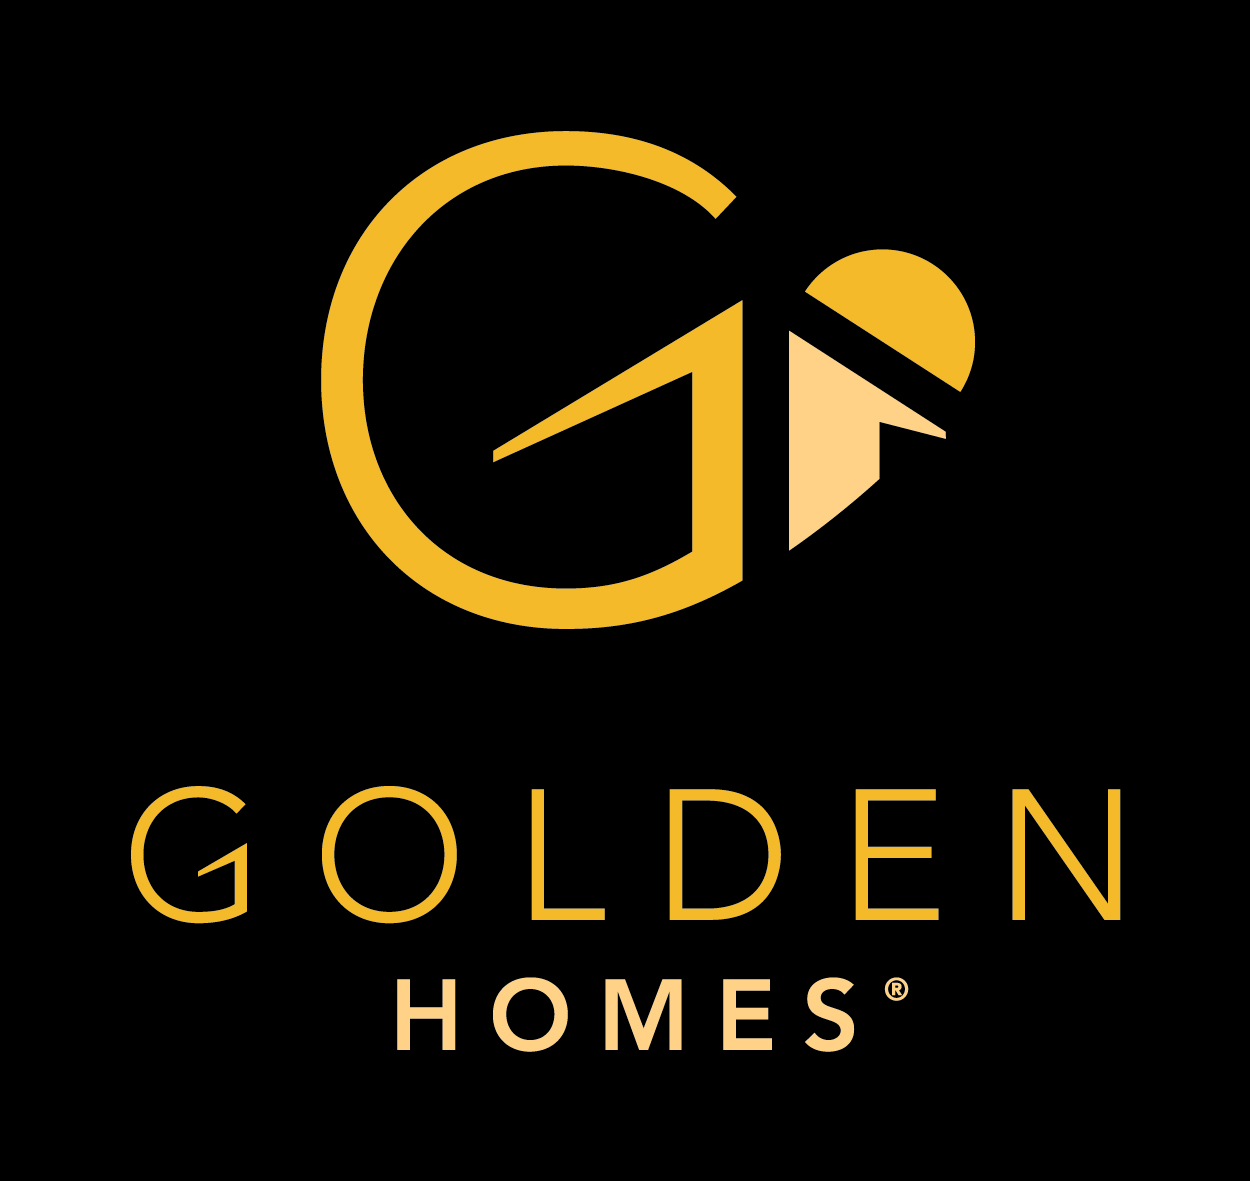 Gold home. Golden Home агентство недвижимости. Golden Home logo. Голден хоум папарацци.